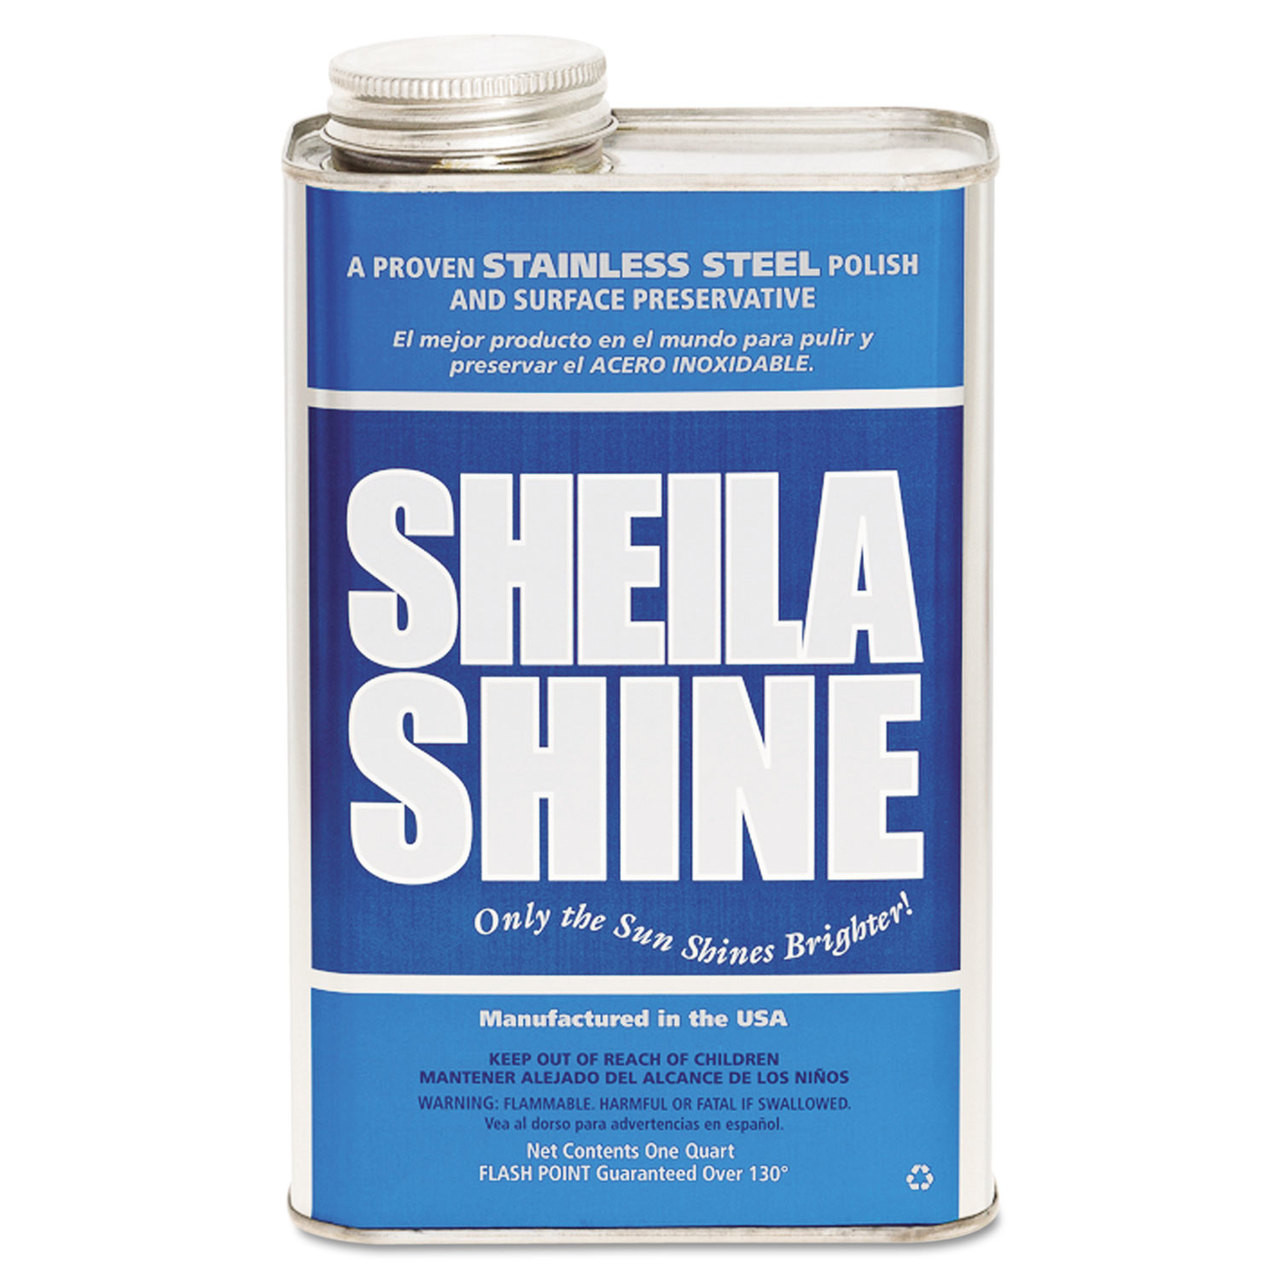 Sheila Shine Stainless Steel Cleaner & Polish - 1 gal jug